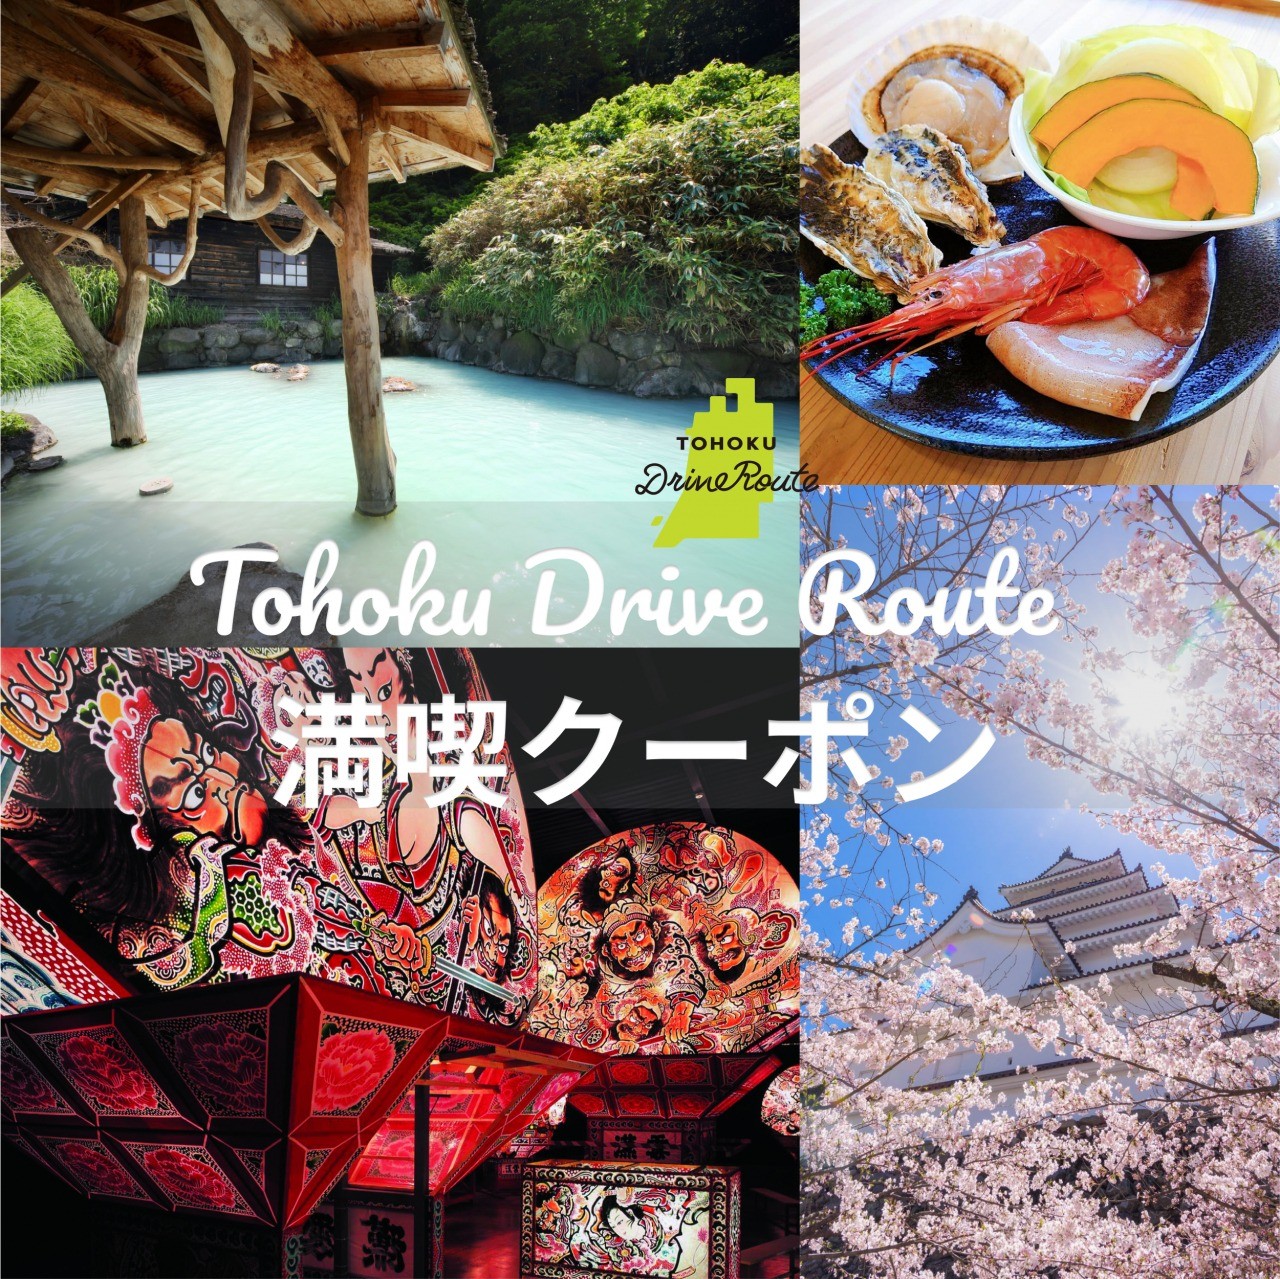 Tohoku Drive Route Enjoy Coupon